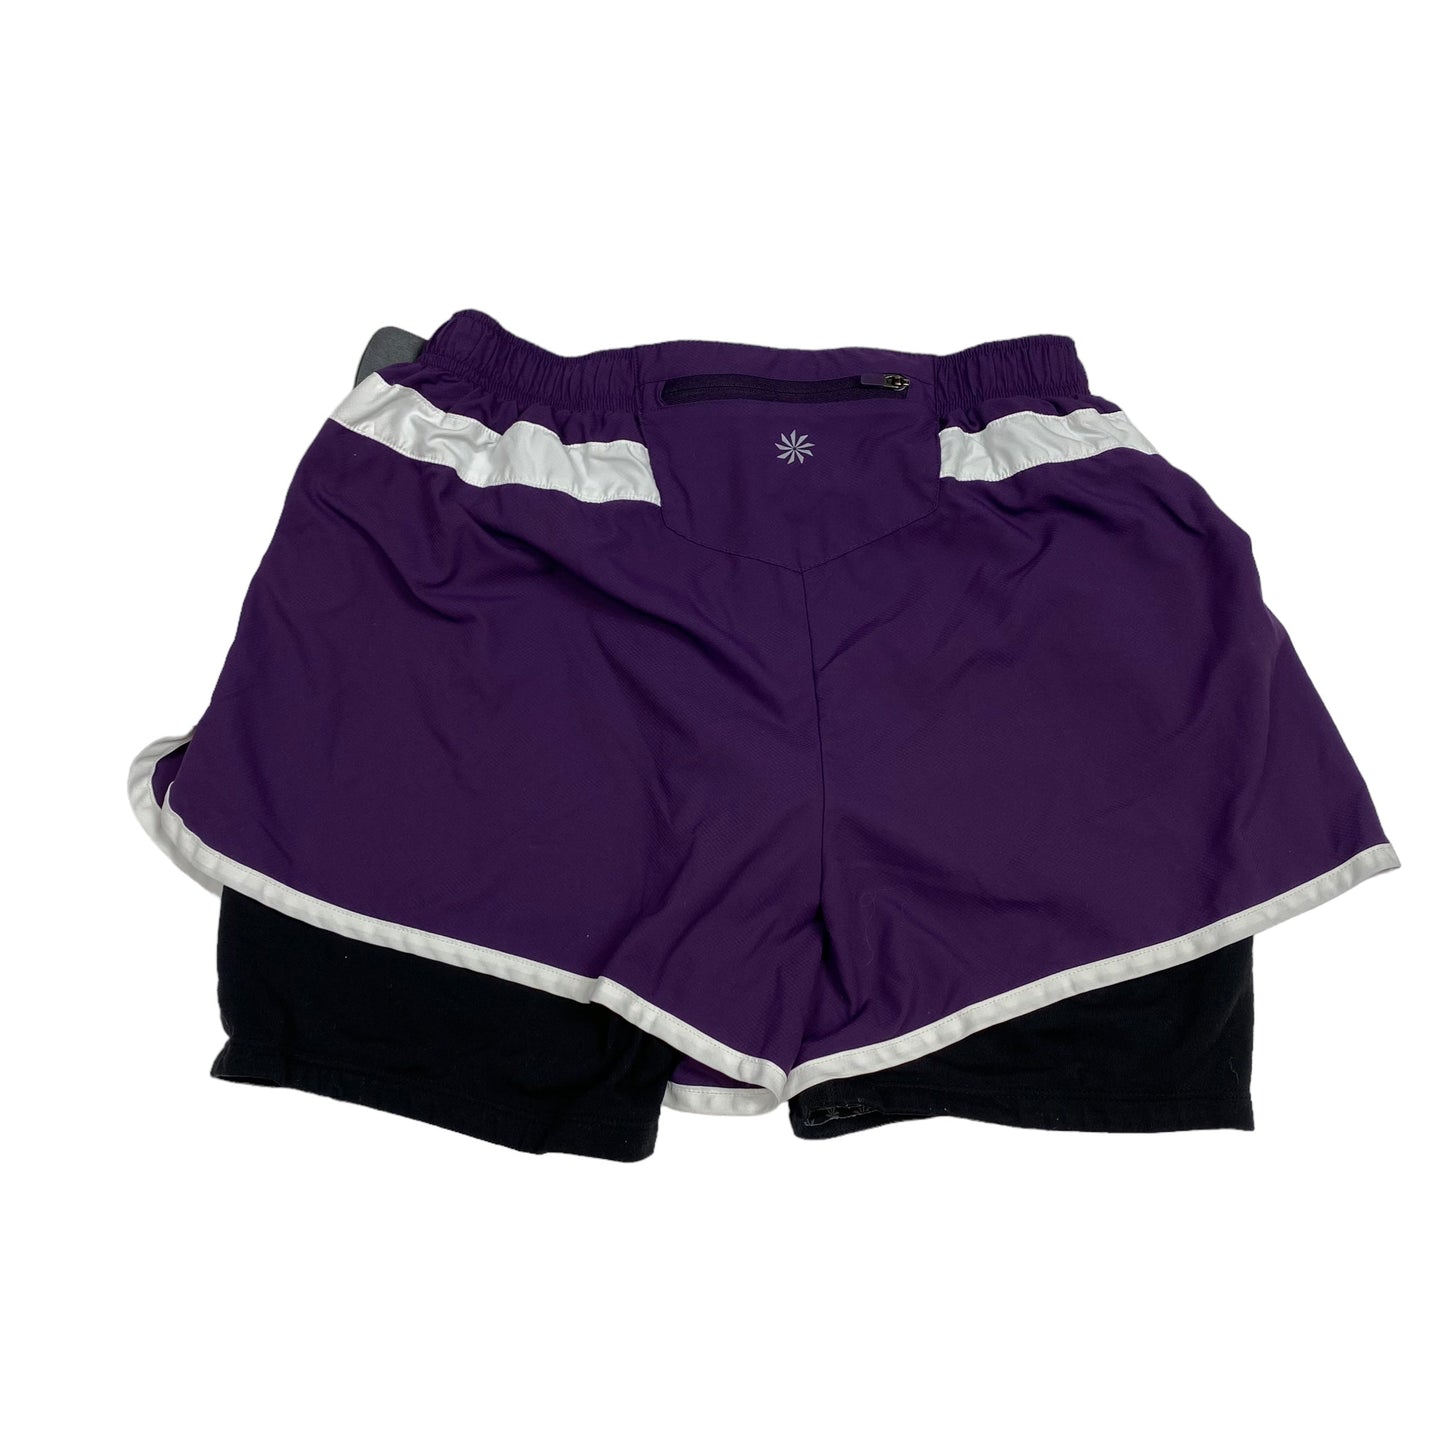 Athletic Shorts By Athleta  Size: S